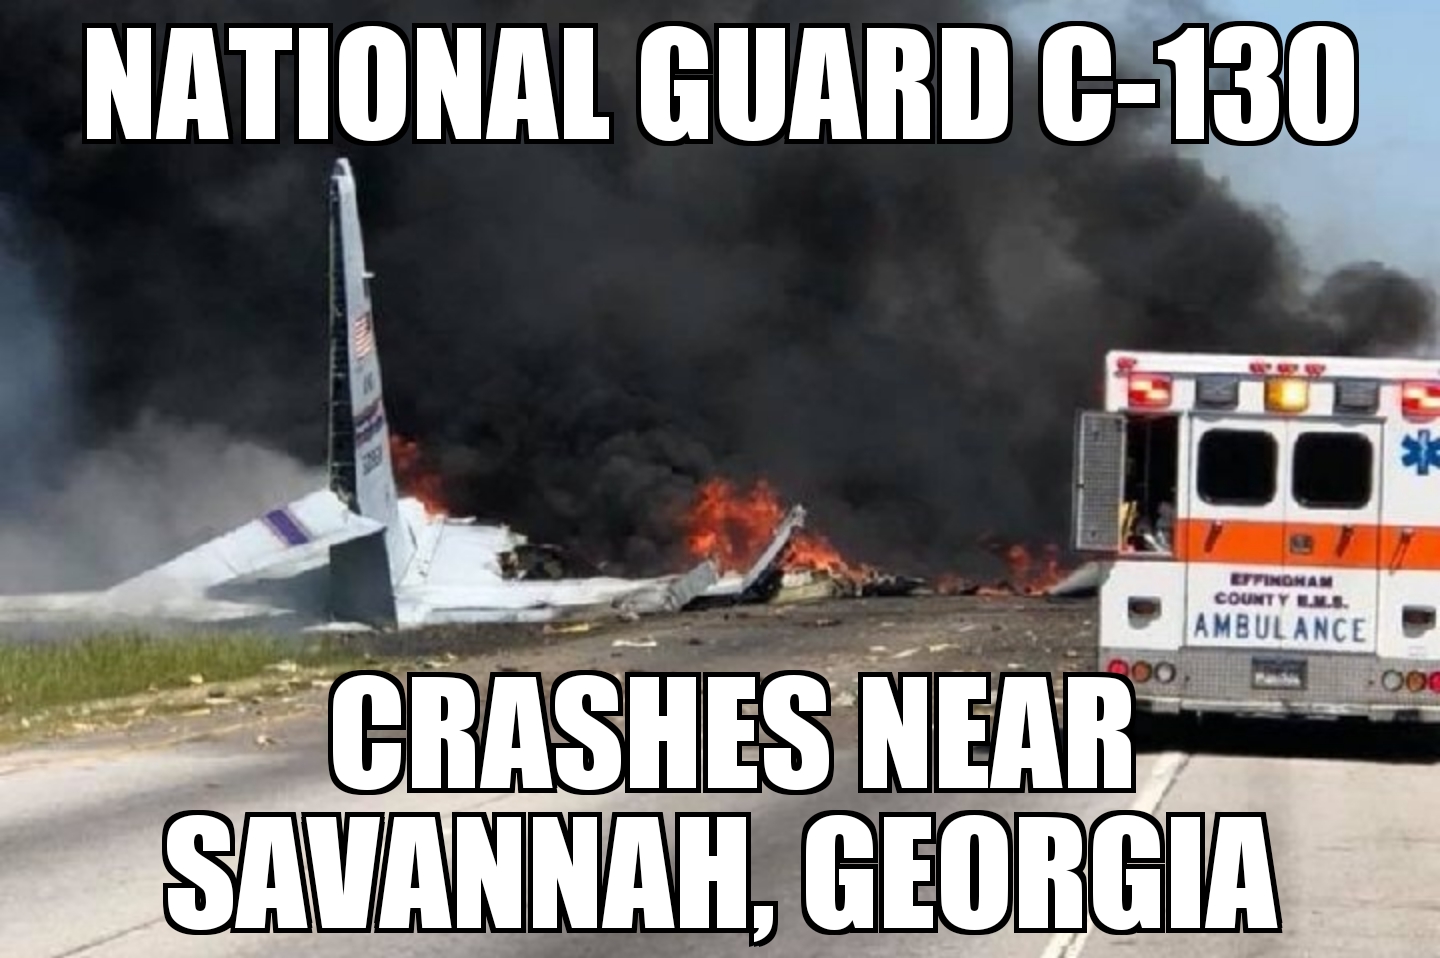 Georgia National Guard C-130 crash